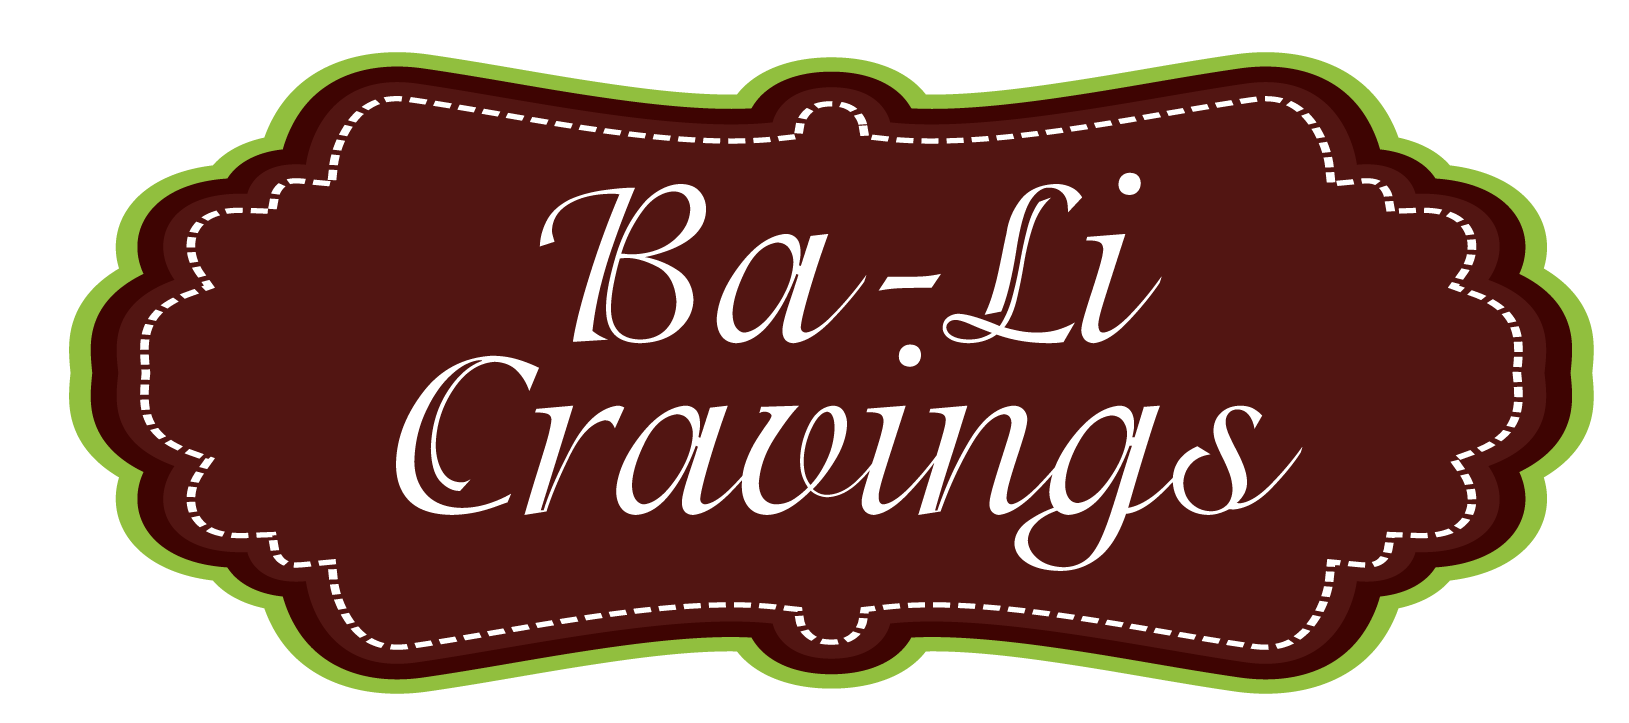 Ba-Li Cravings